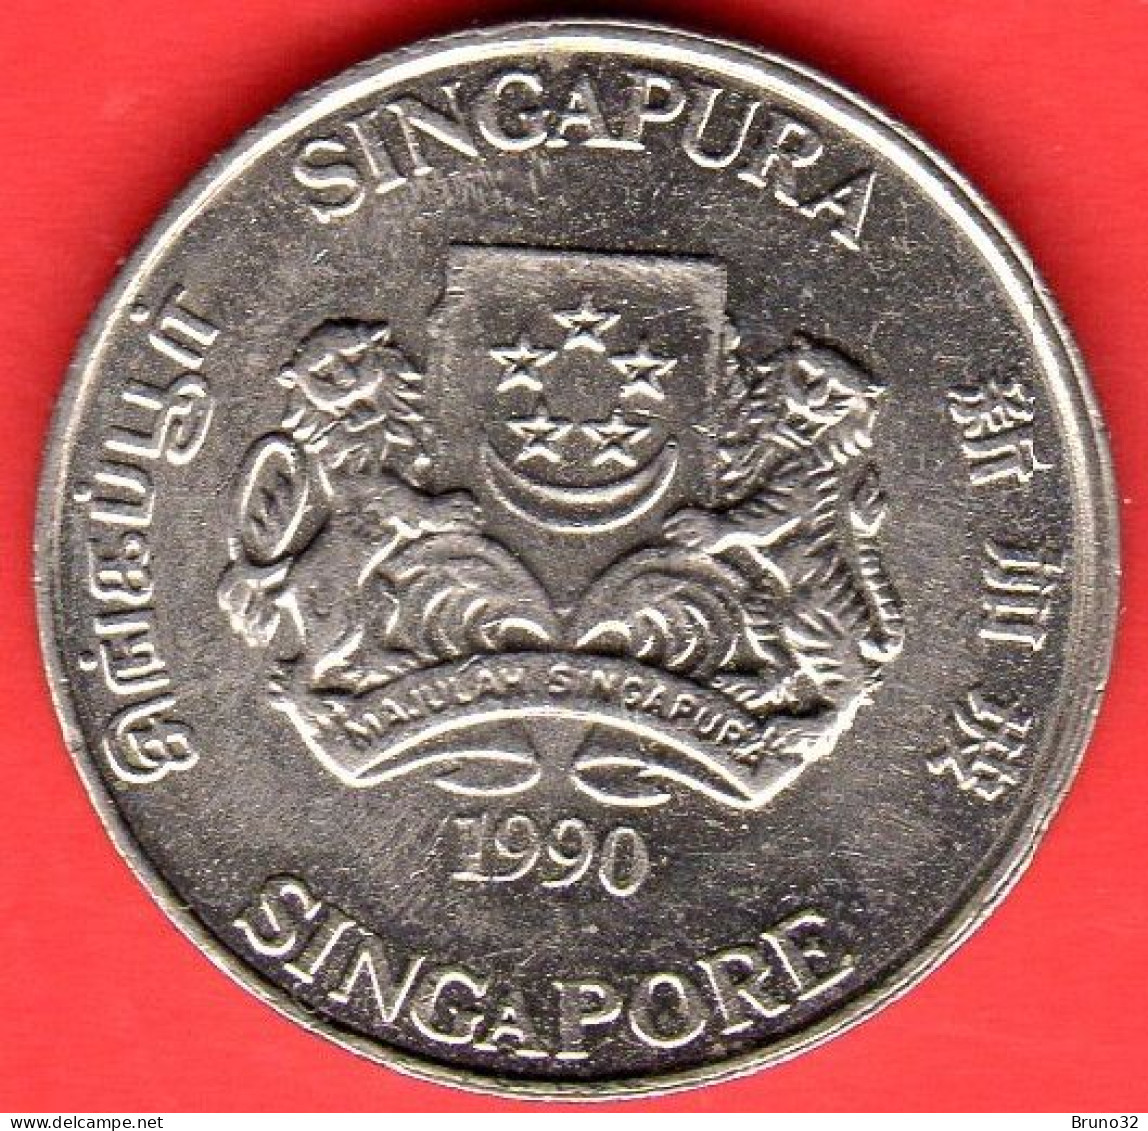 SINGAPORE - Singapura - 1990 - 20 Cents - QFDC/aUNC - Come Da Foto - Singapour